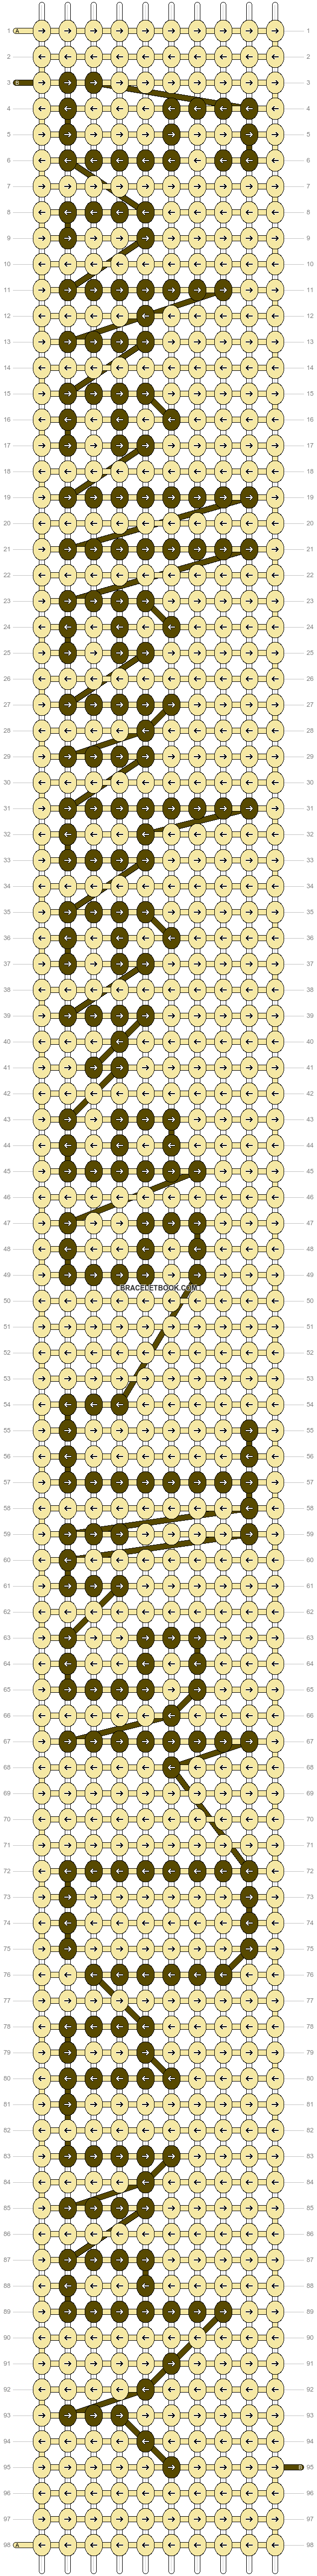 Alpha pattern #1809 pattern